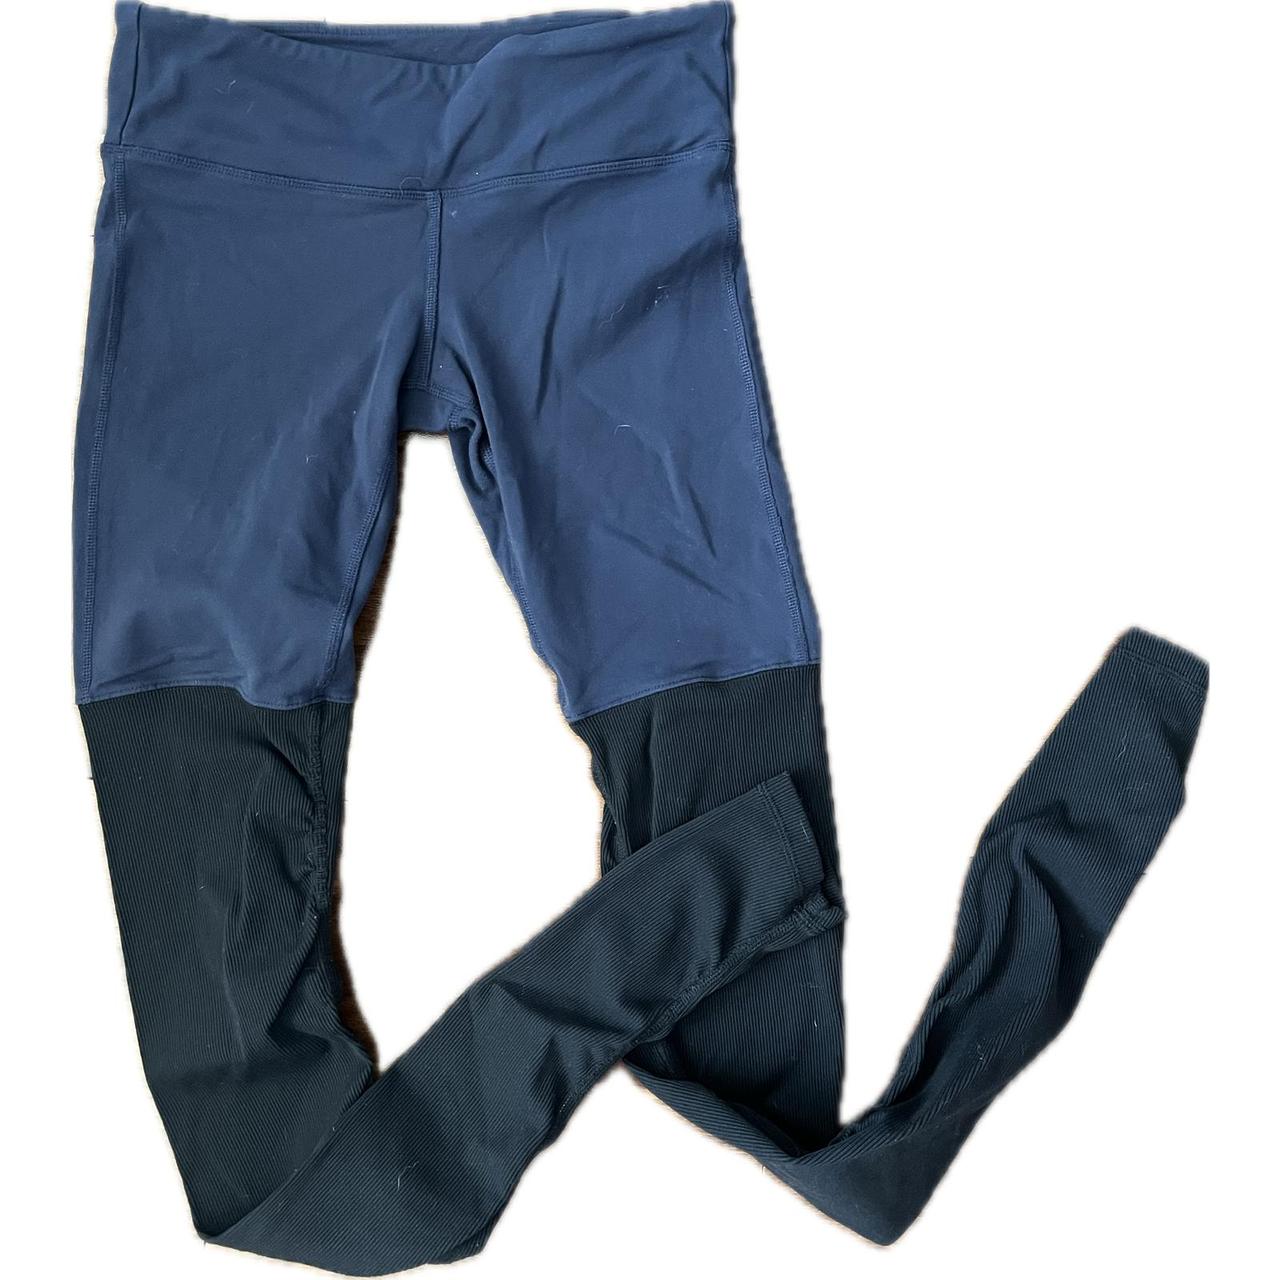 Alo ruched leg tights leggings blue black no size, - Depop